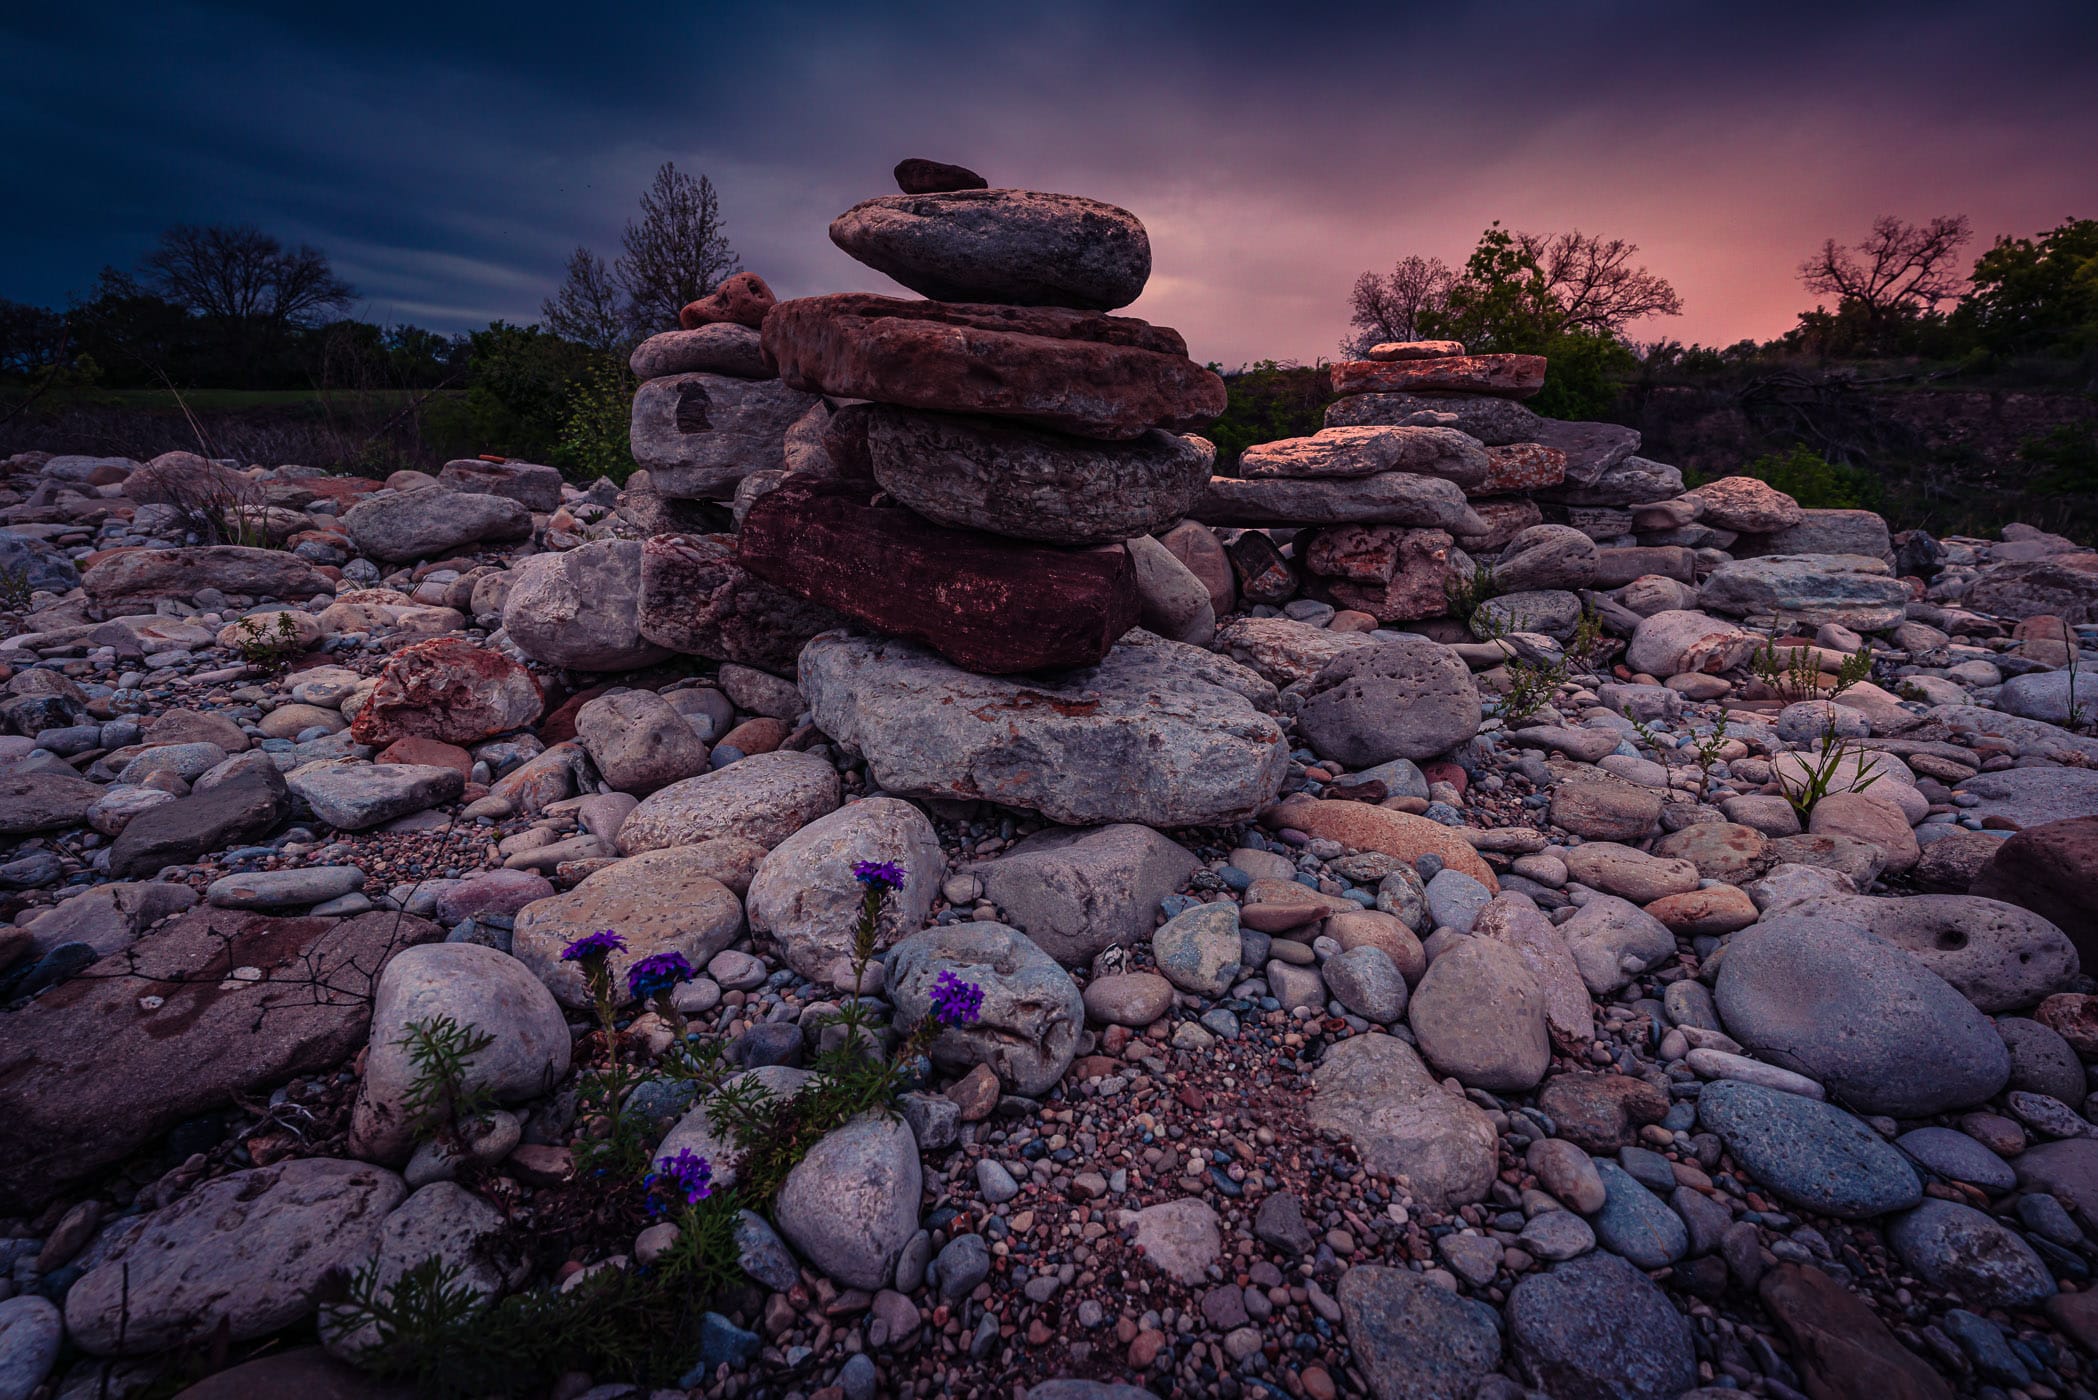 A stack of river stones along the shore of the Llano River near Mason, Texas.